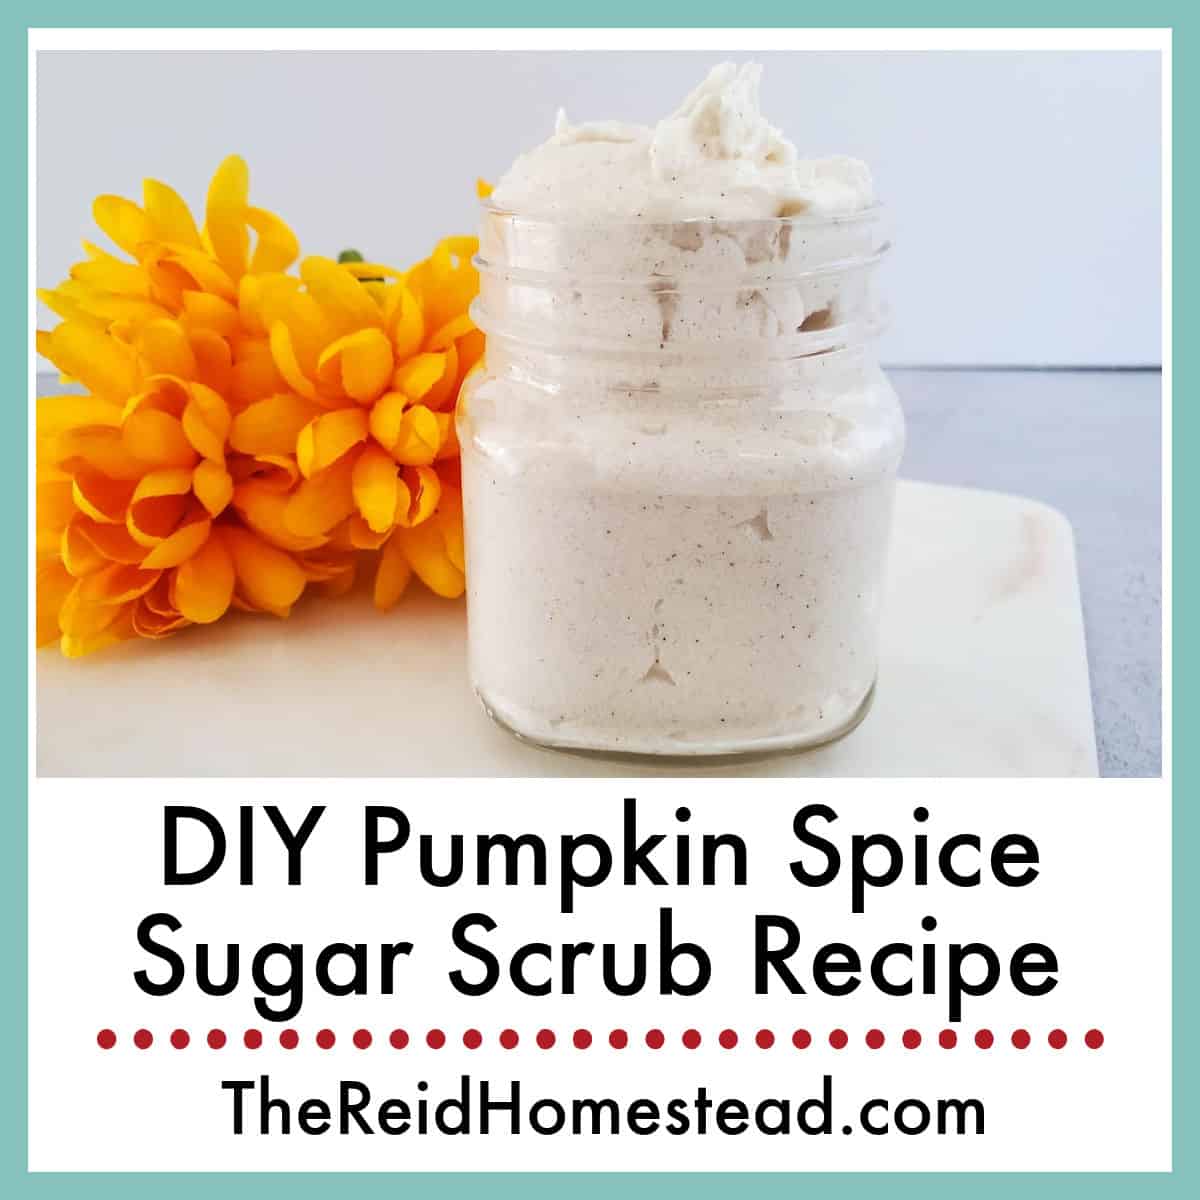 a jar of pumpkin spice sugar scrub next to an orange flower, text overlay DIY Pumpkin Spice Sugar Scrub Recipe